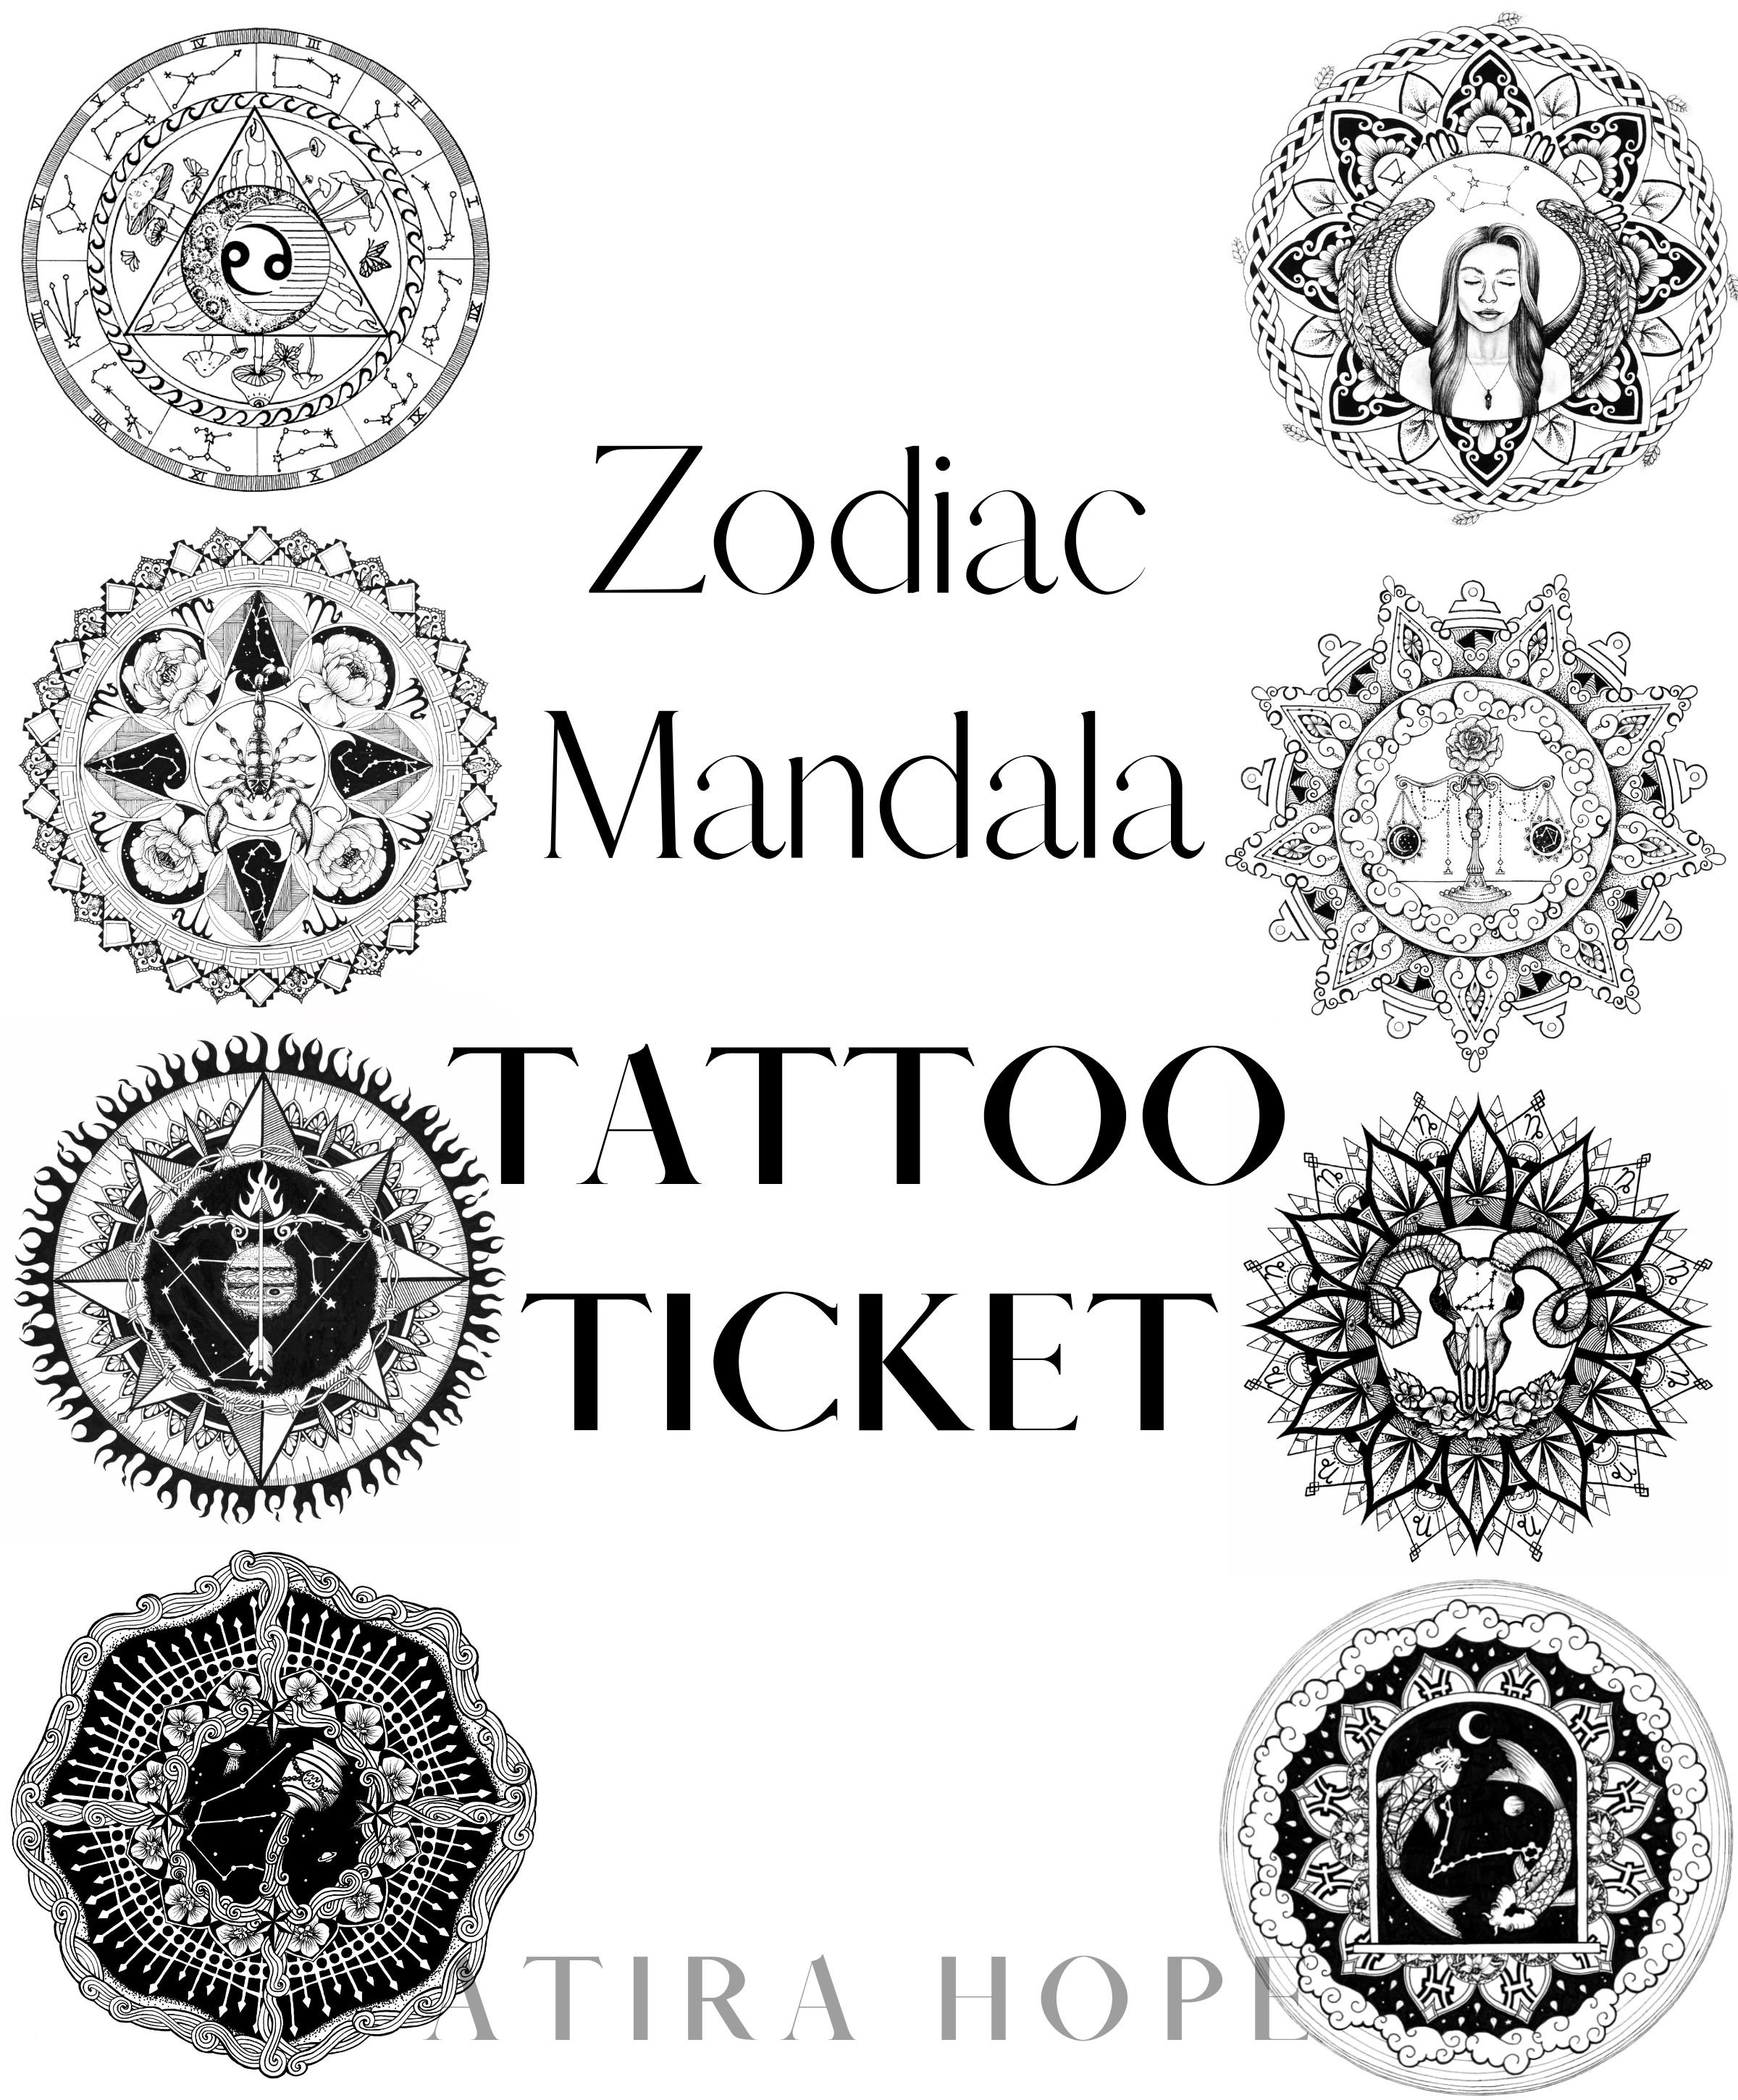 Zodiac Mandala Tattoo Ticket Cancer Virgo Libra Scorpio - Etsy